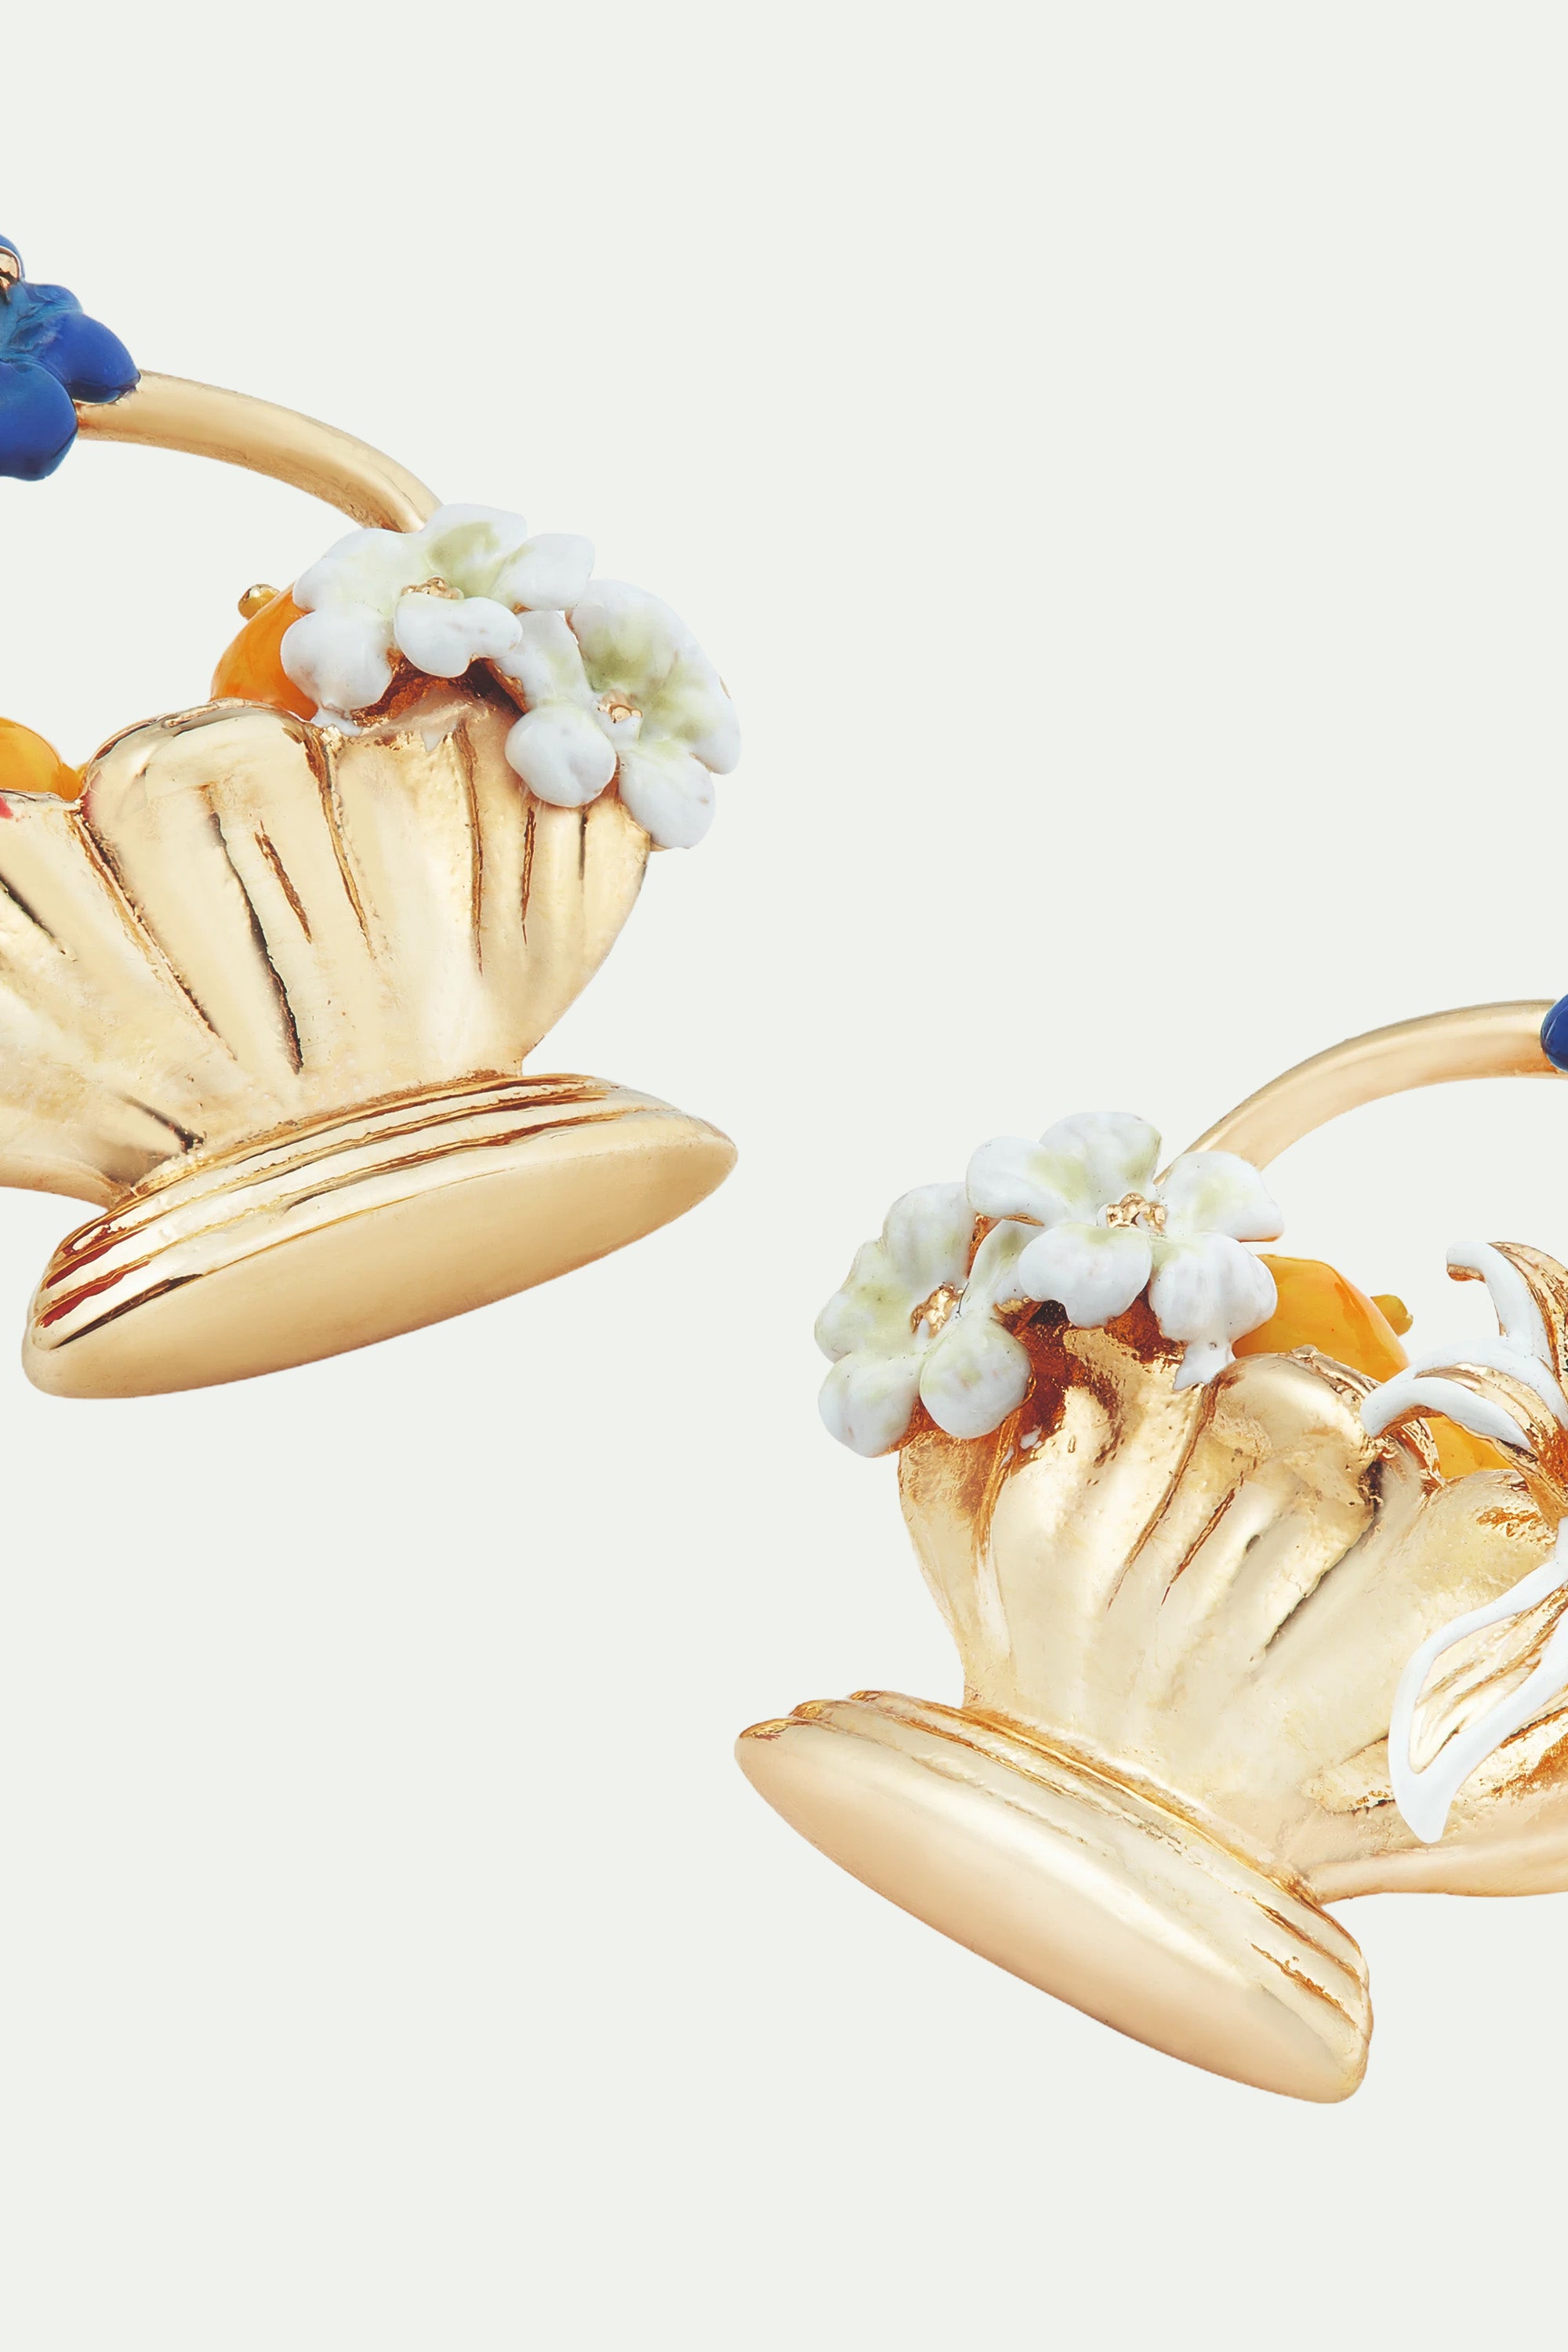 Fruit bowls and flower post earrings